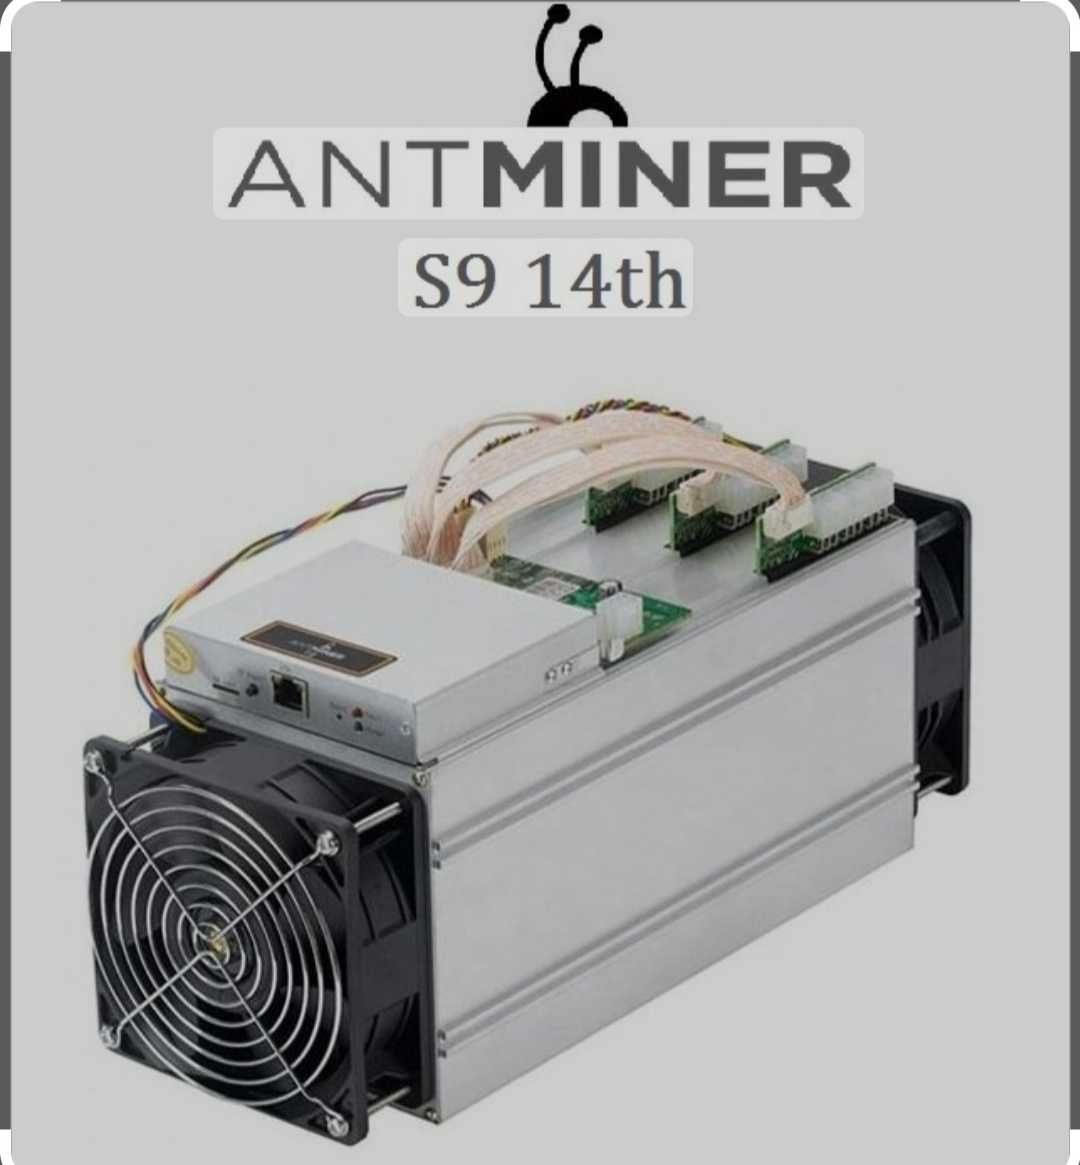 ASIC Antminer S9 14th